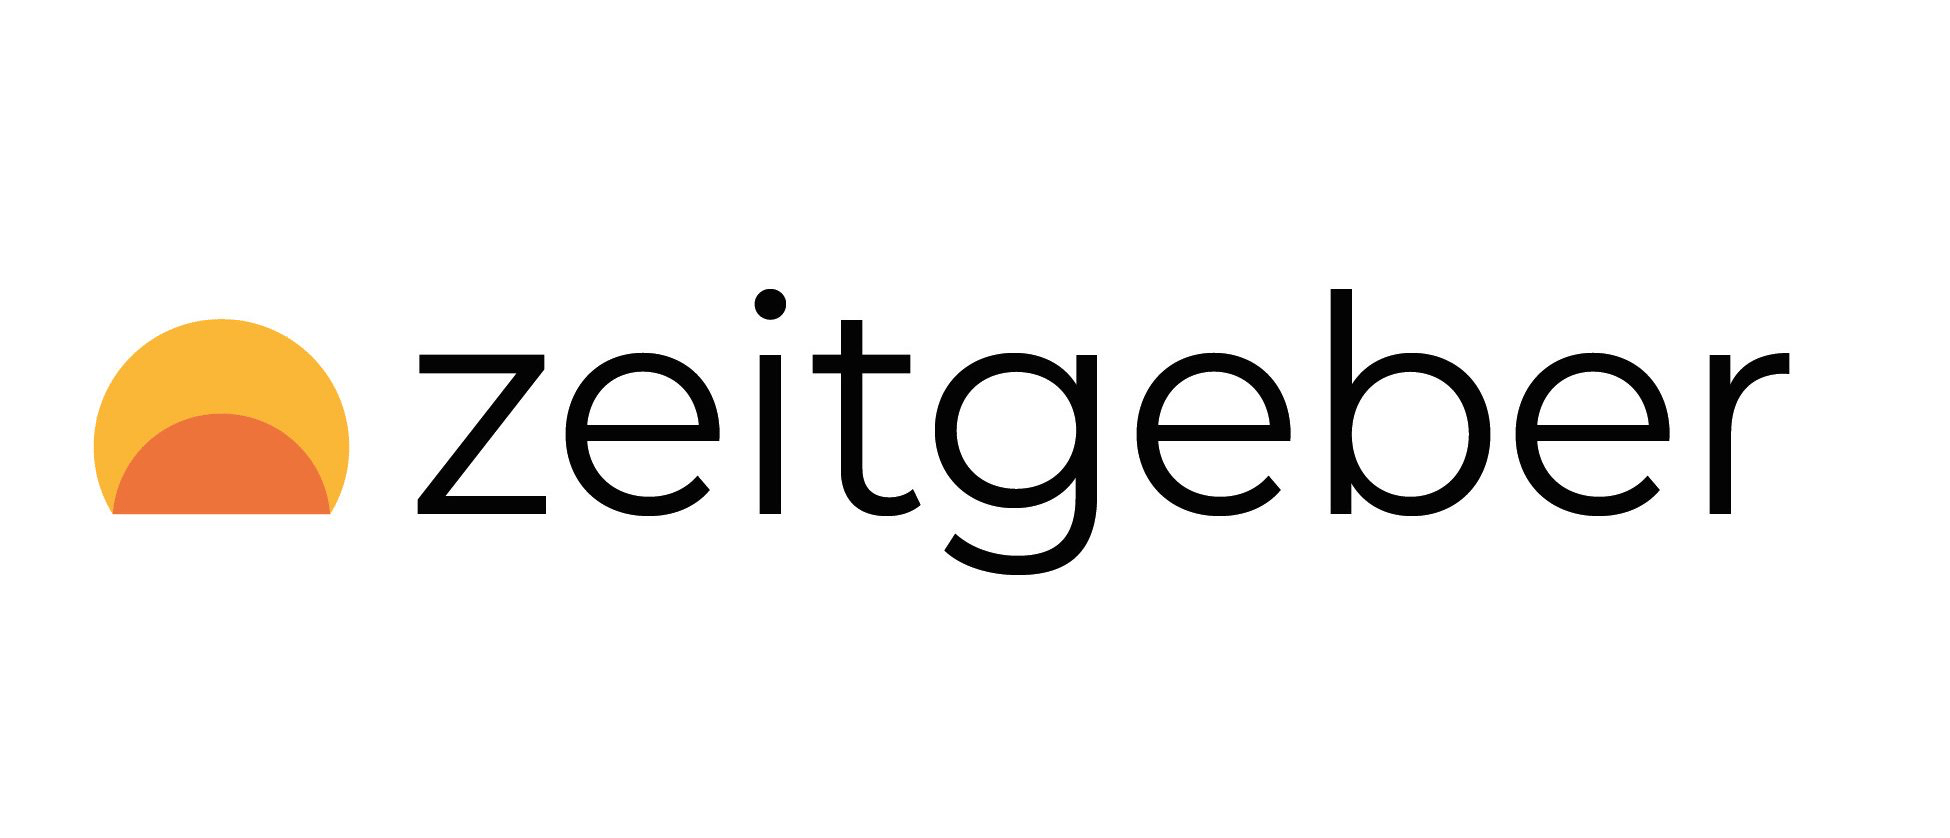 Zeitgeber logo